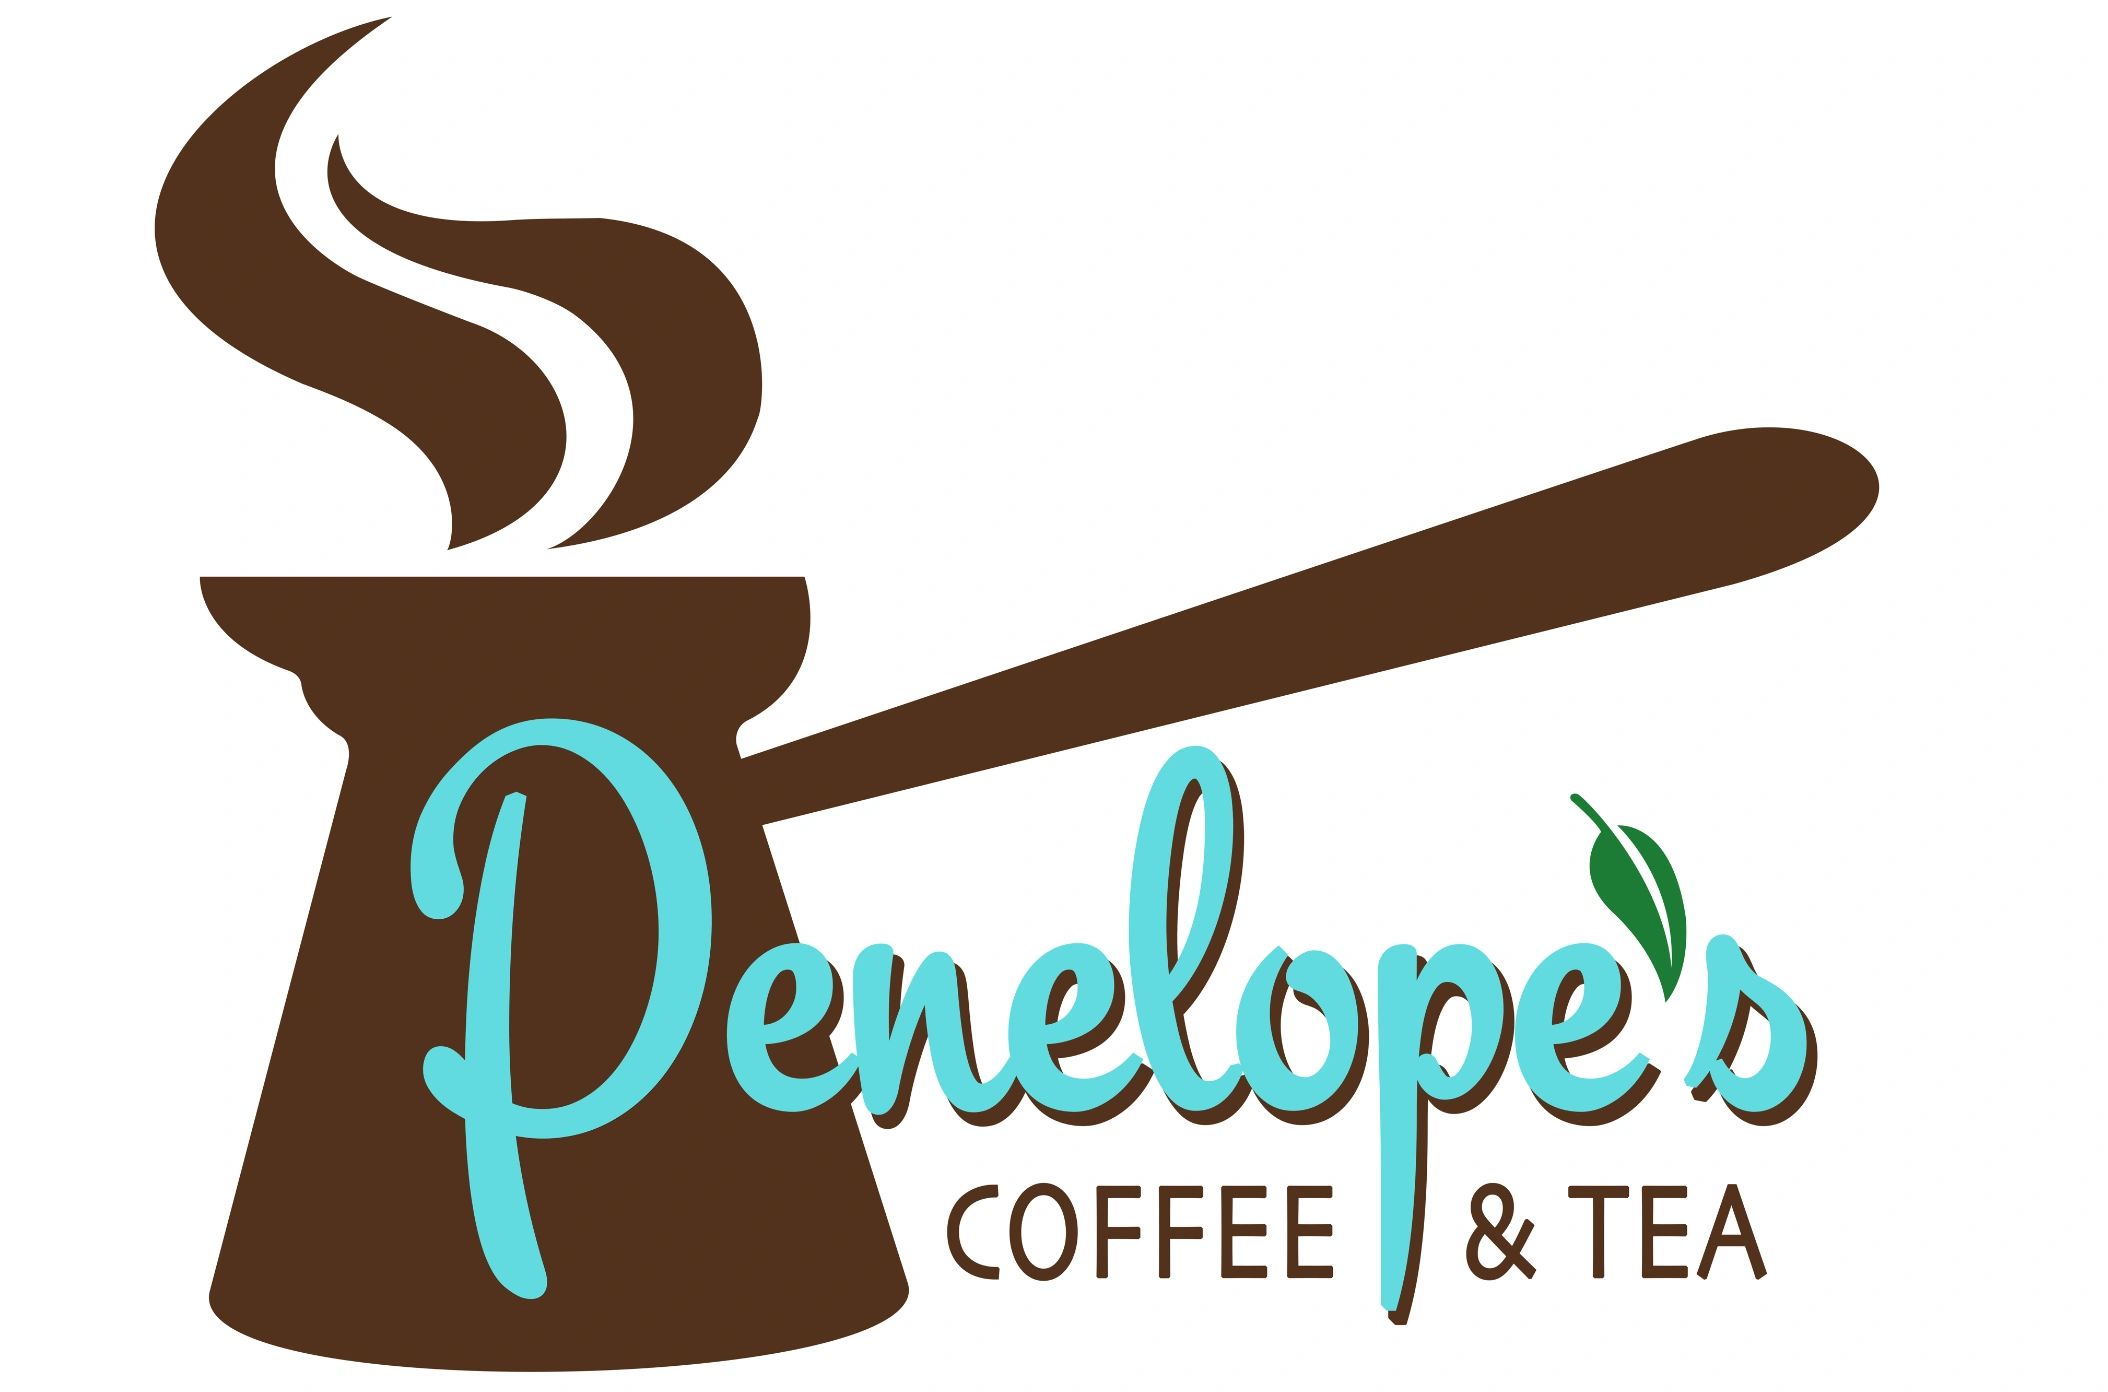 Penelopes coffee and tea